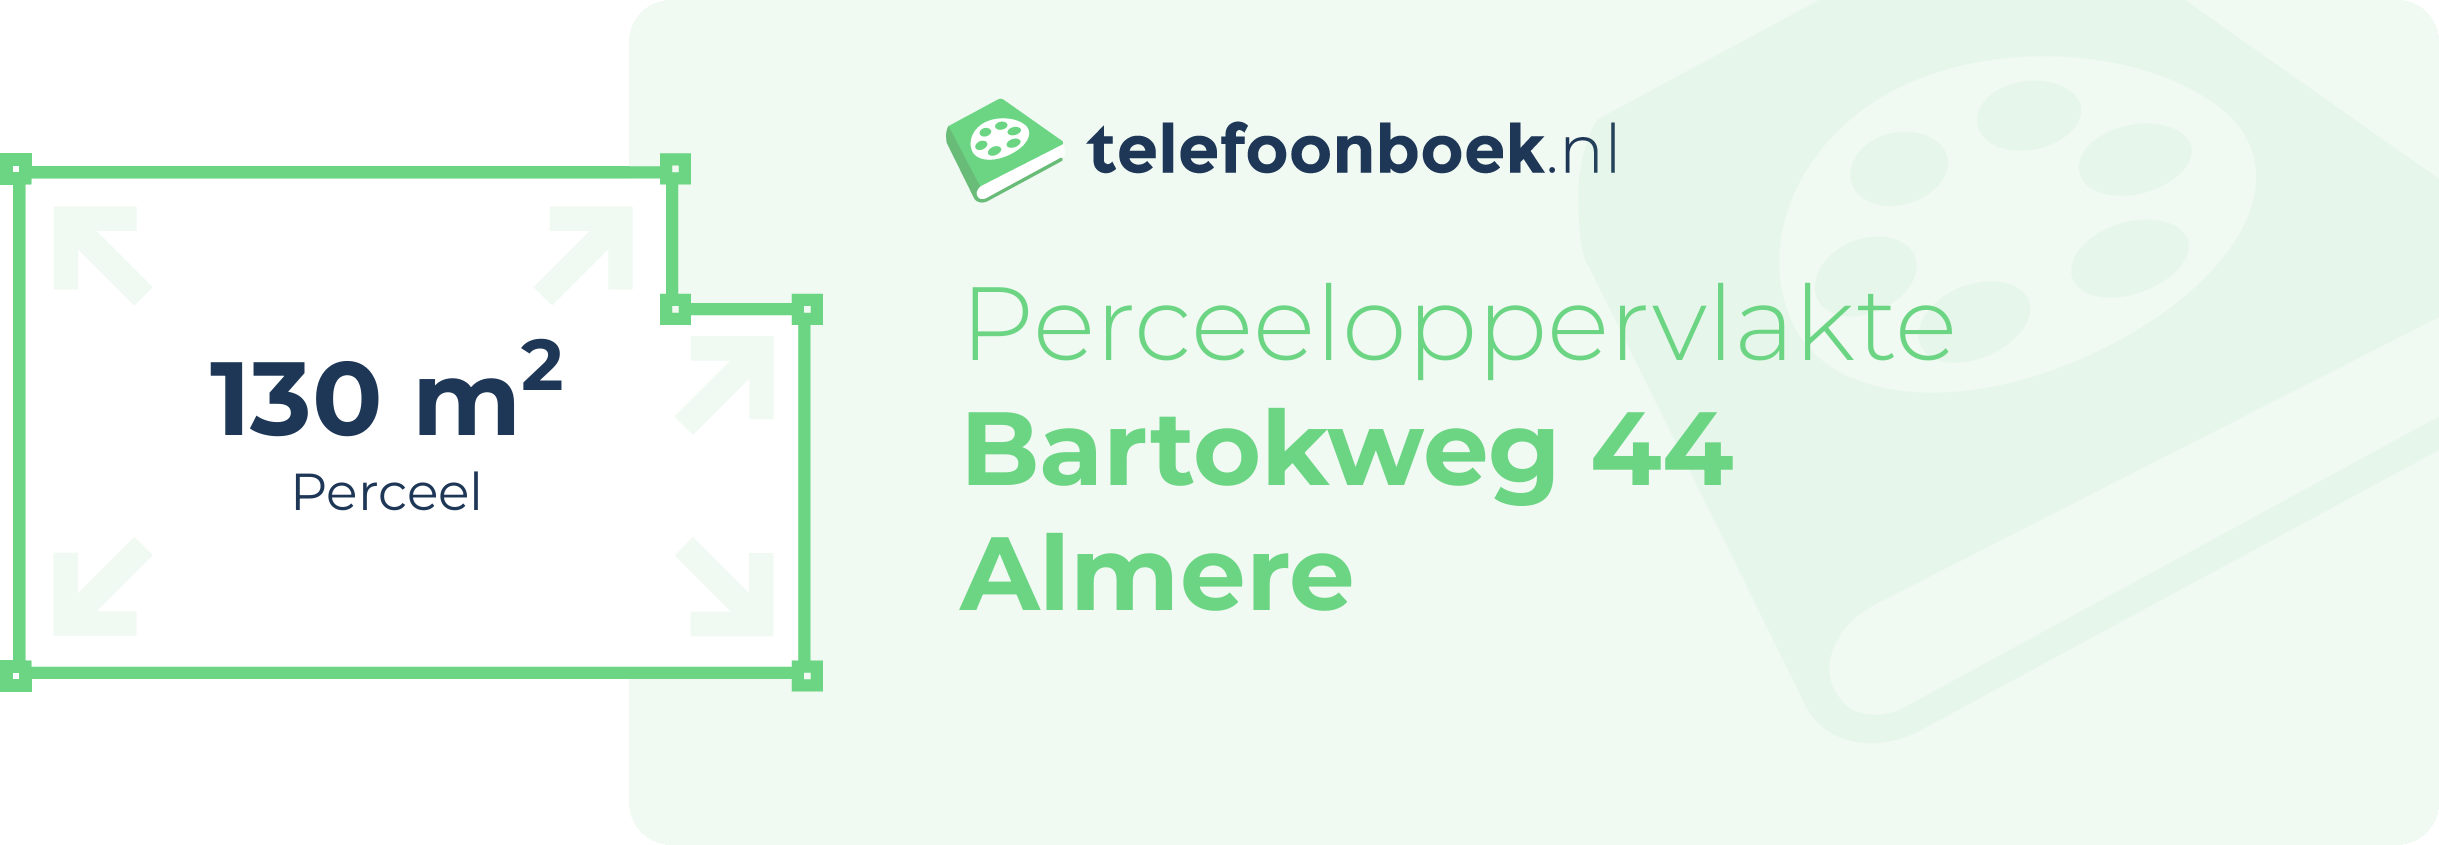 Perceeloppervlakte Bartokweg 44 Almere